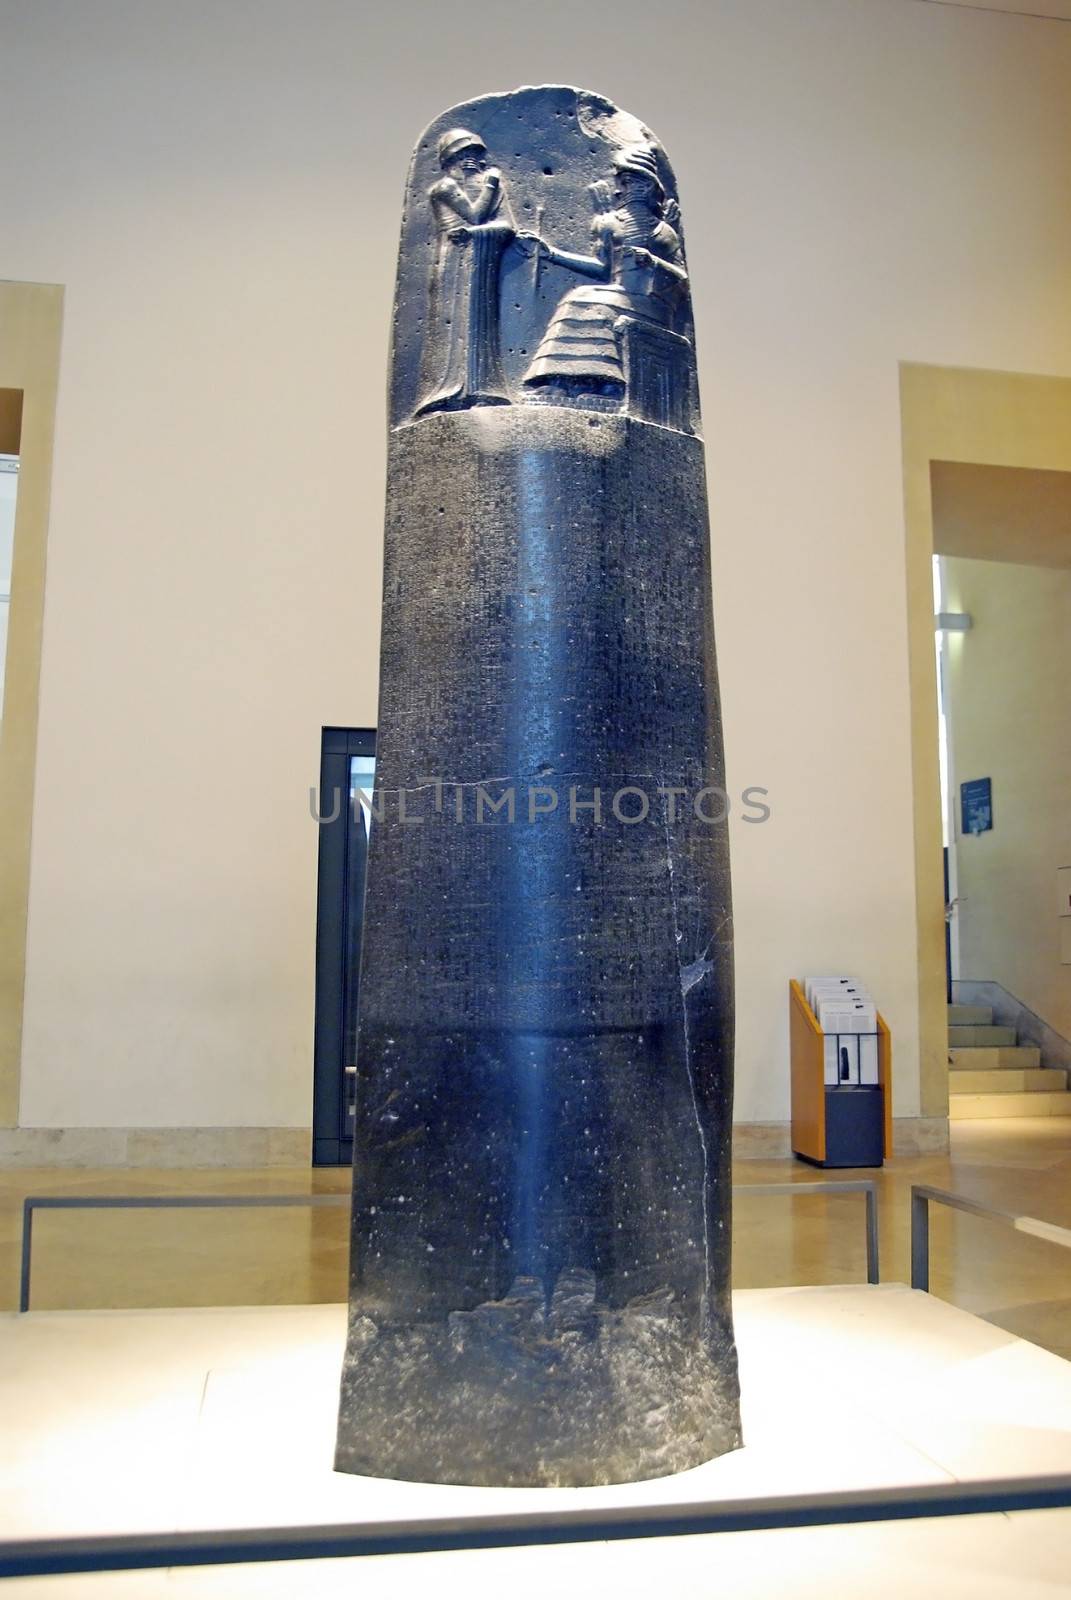 Law Code of Hammurabi by savcoco